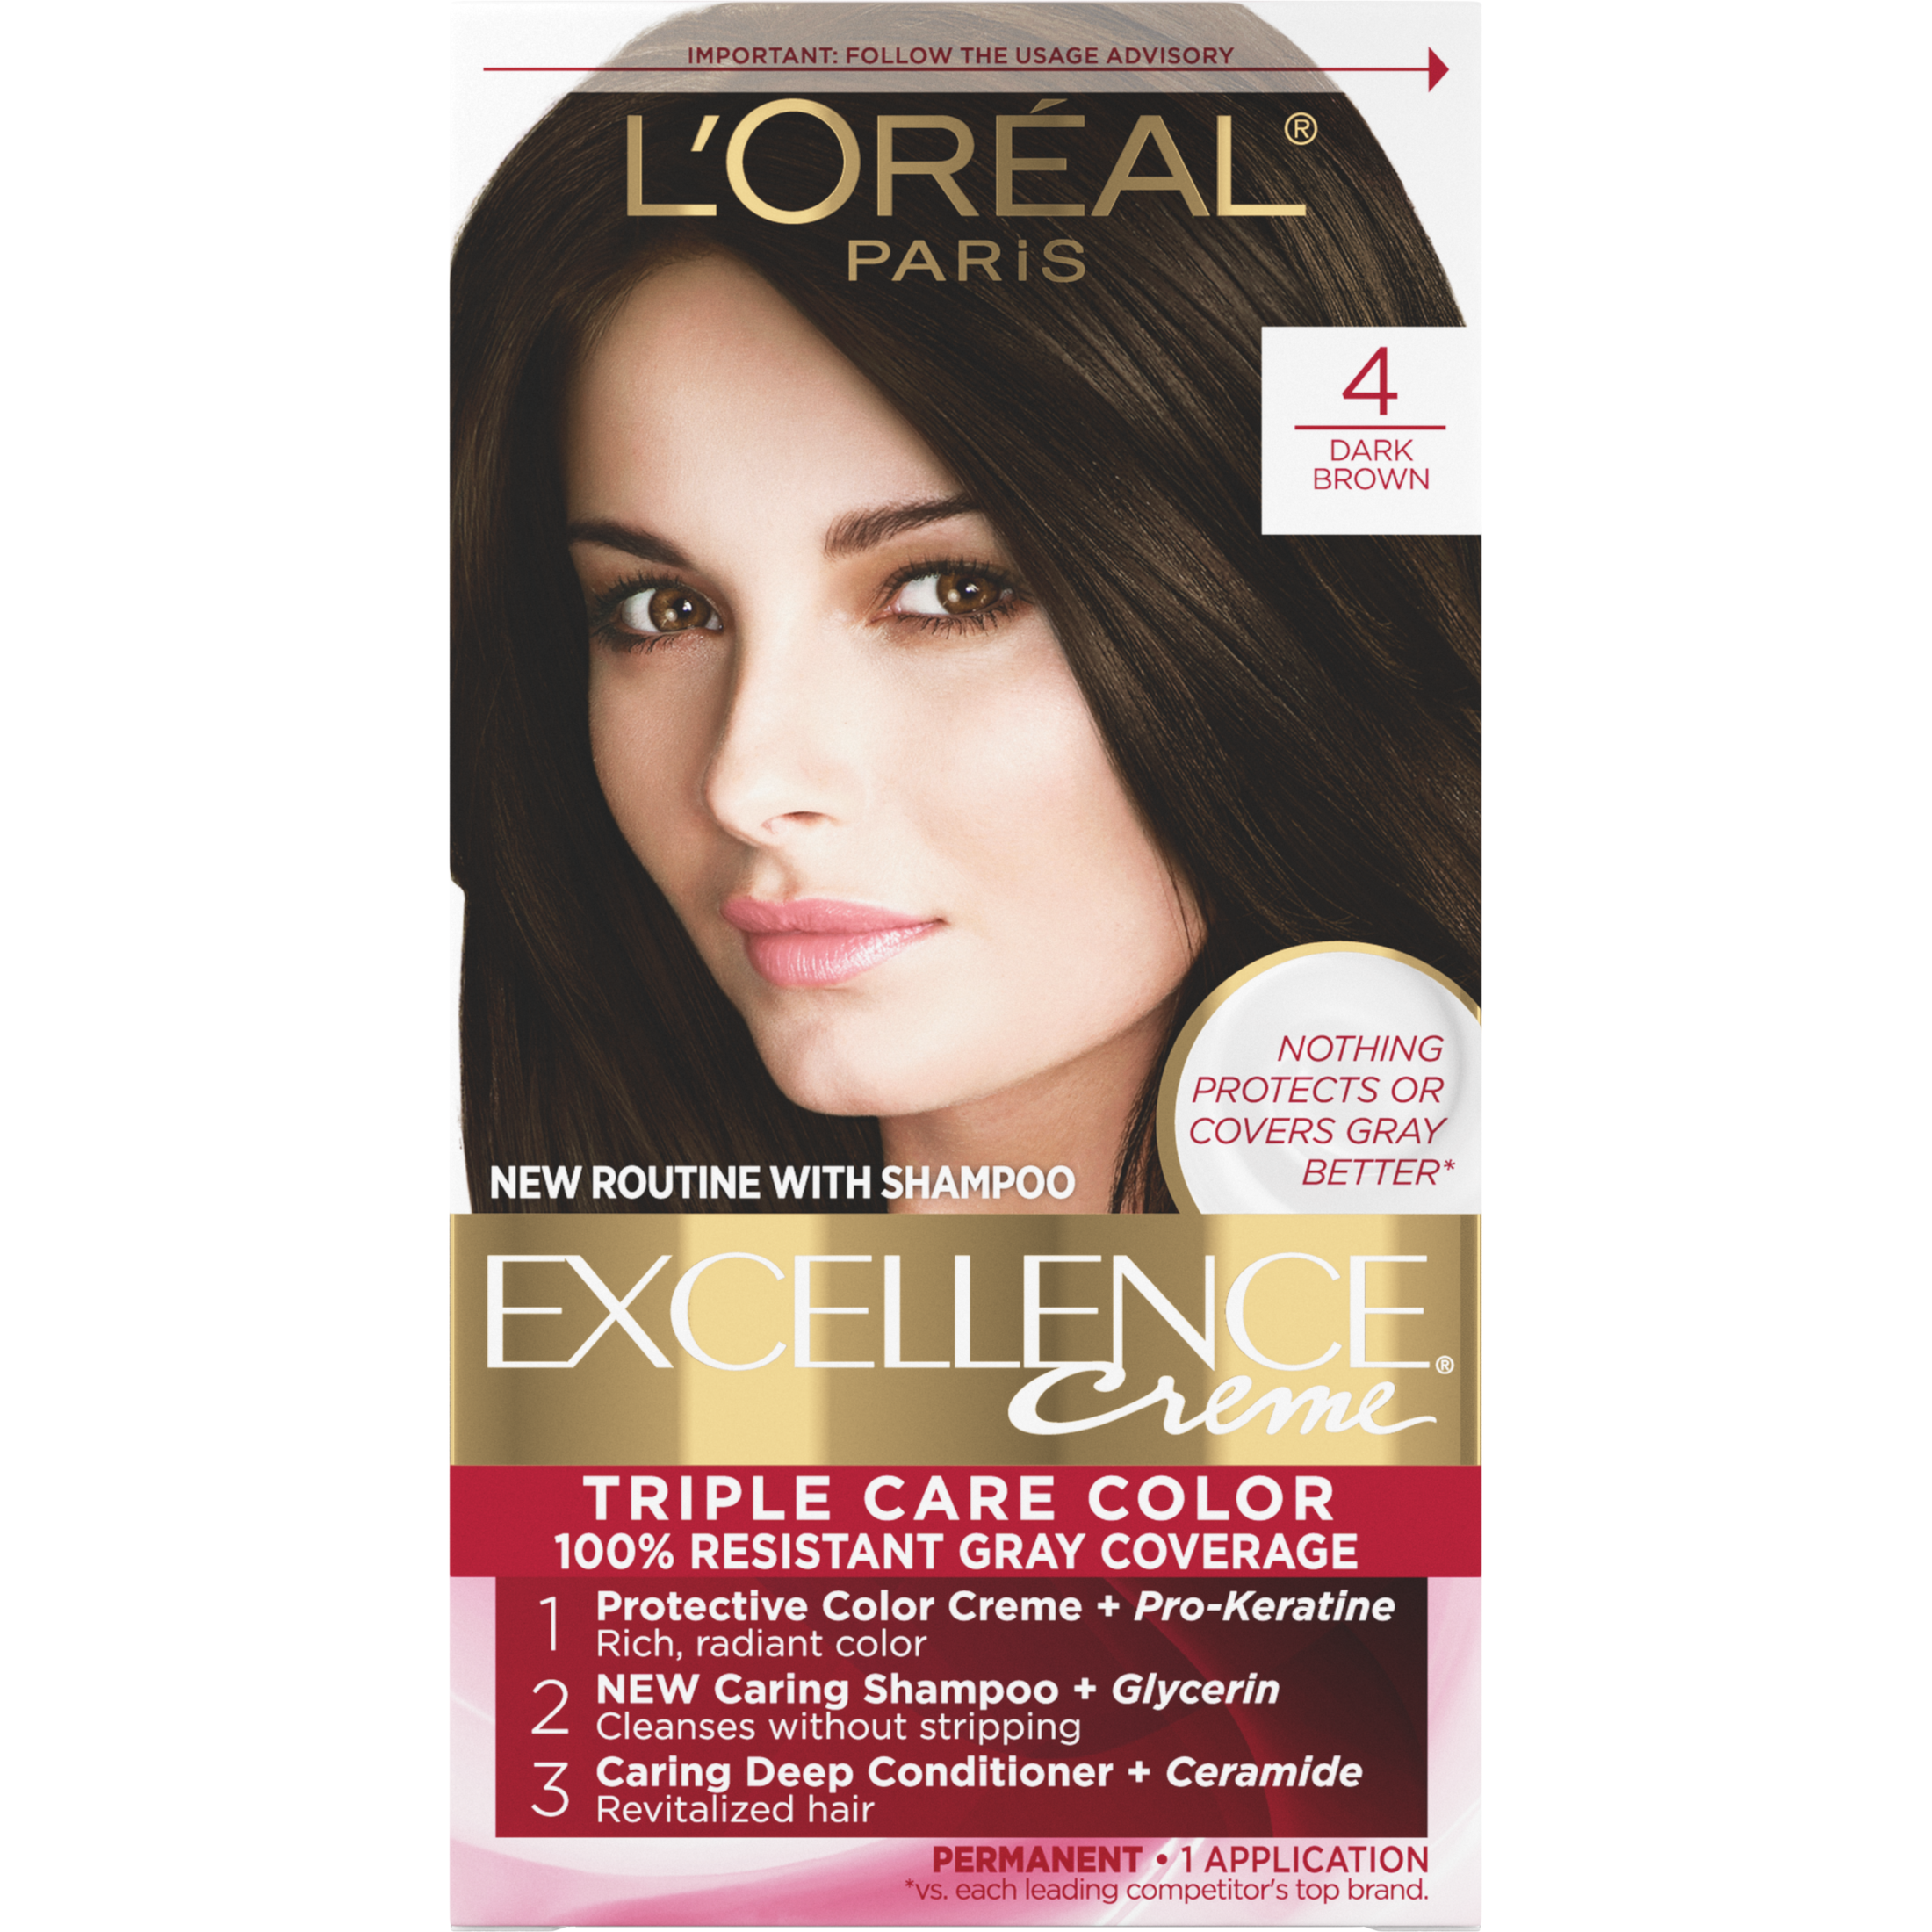 L'Oreal Paris Excellence Creme Permanent Hair Color, 4 Dark Brown - image 1 of 8